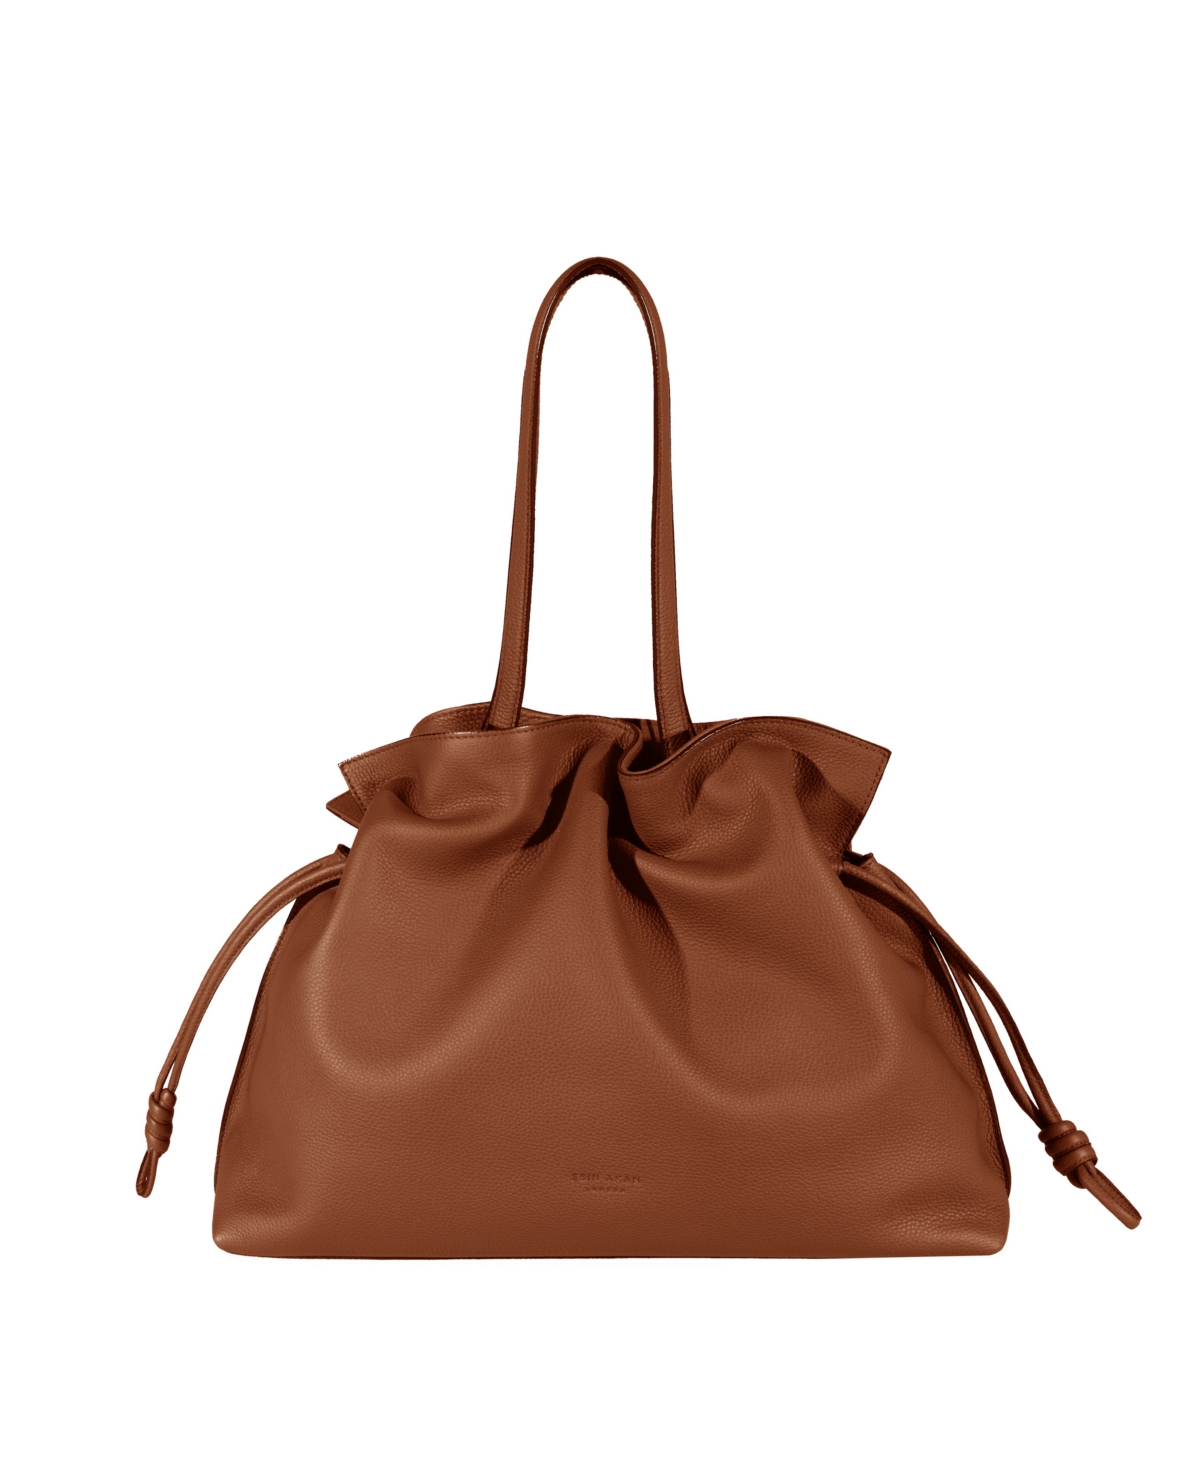 Esin Akan Women's Emma Leather Tote Bag